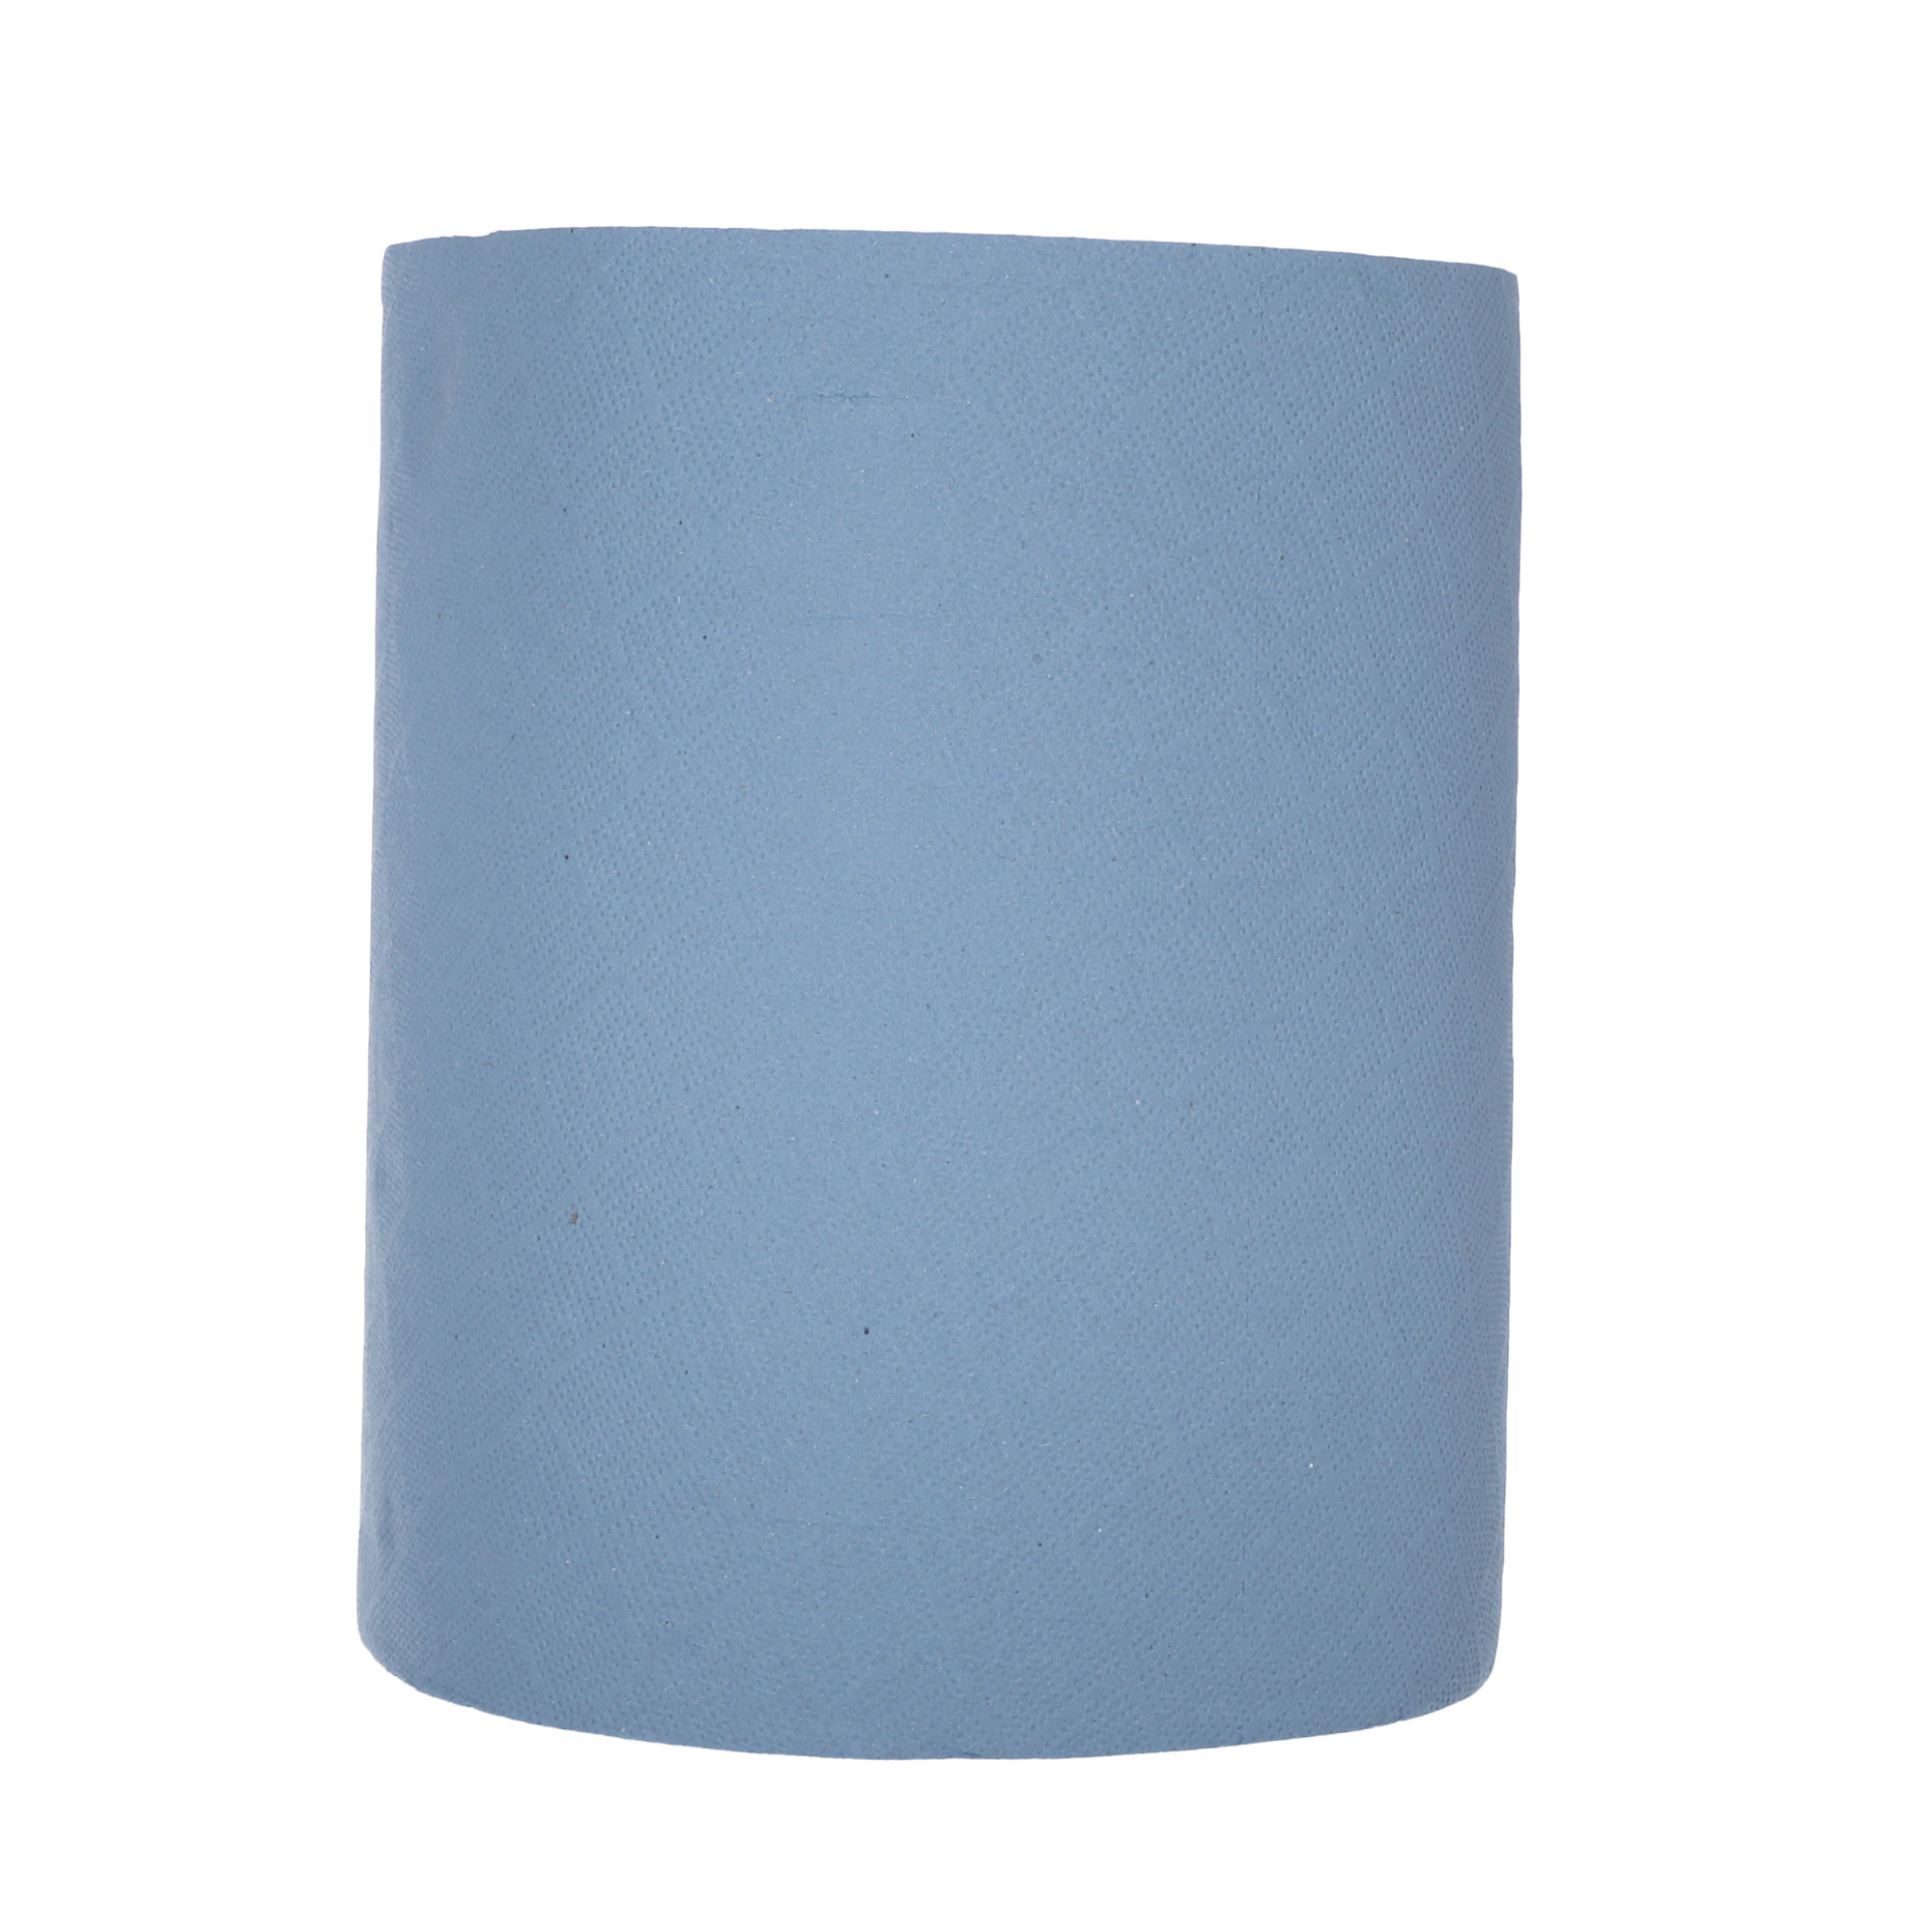 Putztuchrolle blau 2-lagig 2 x 500 Blatt, 2er-Pack + product picture